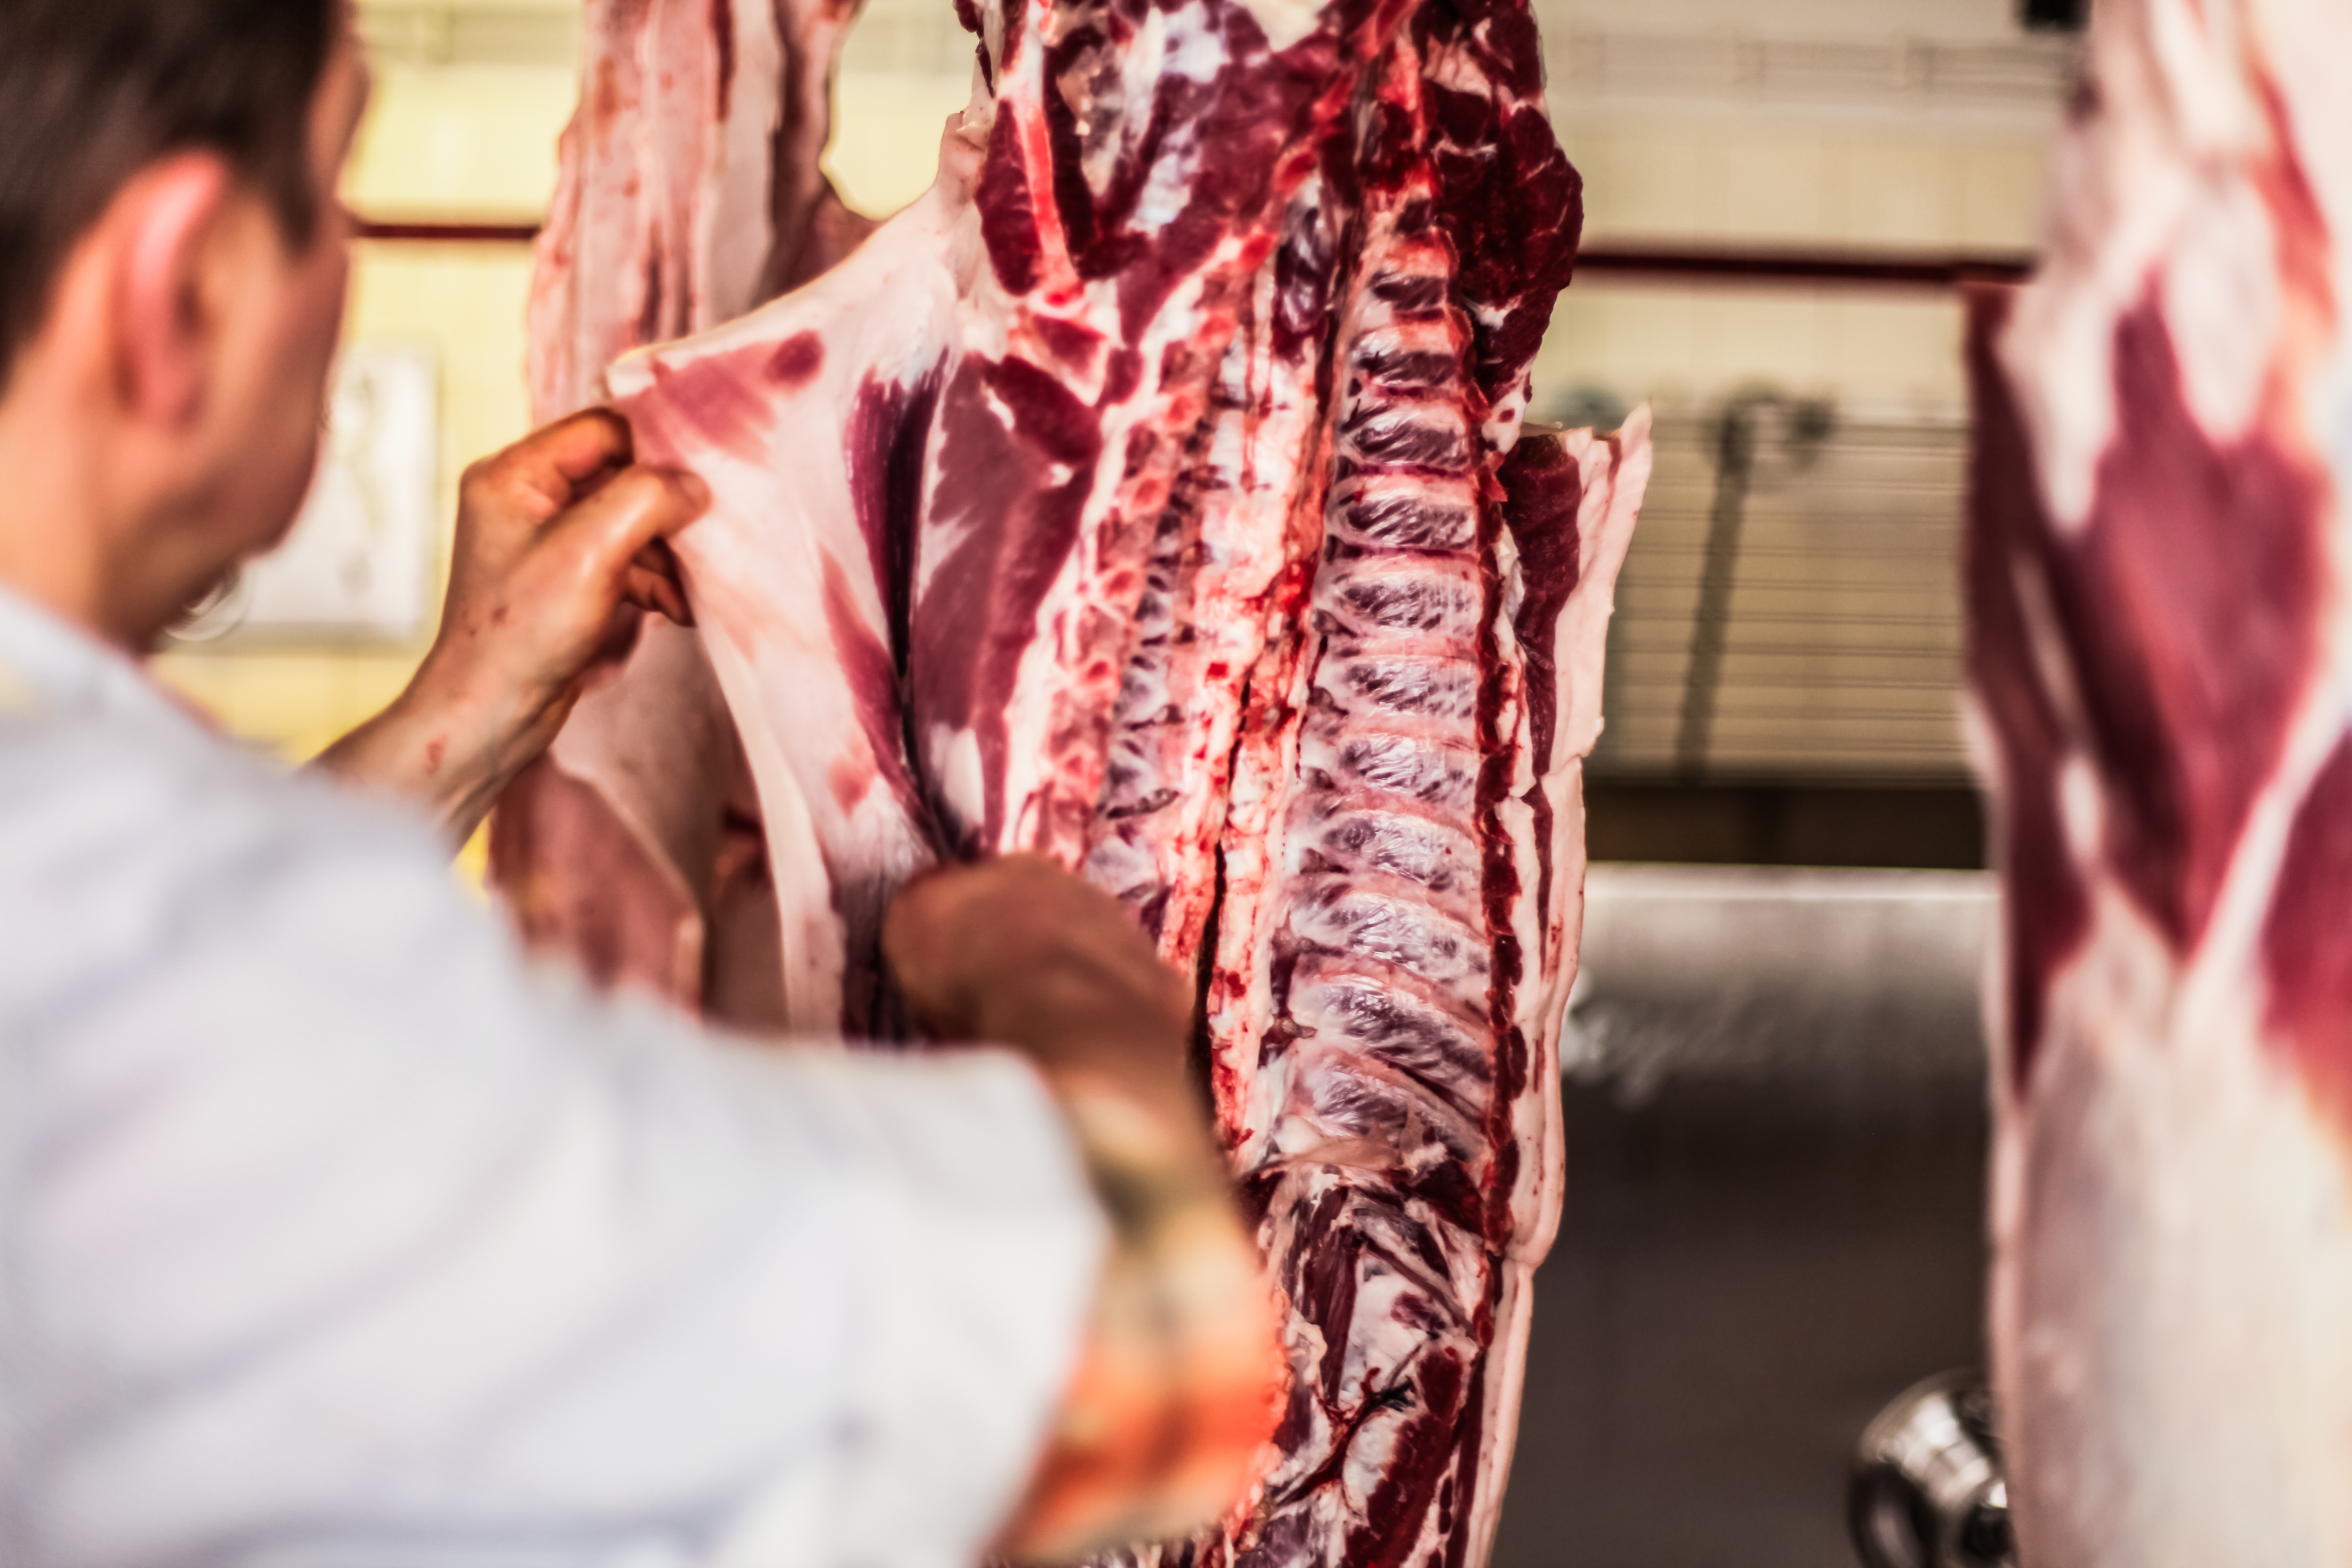 Butcher cutting meat off a carcass